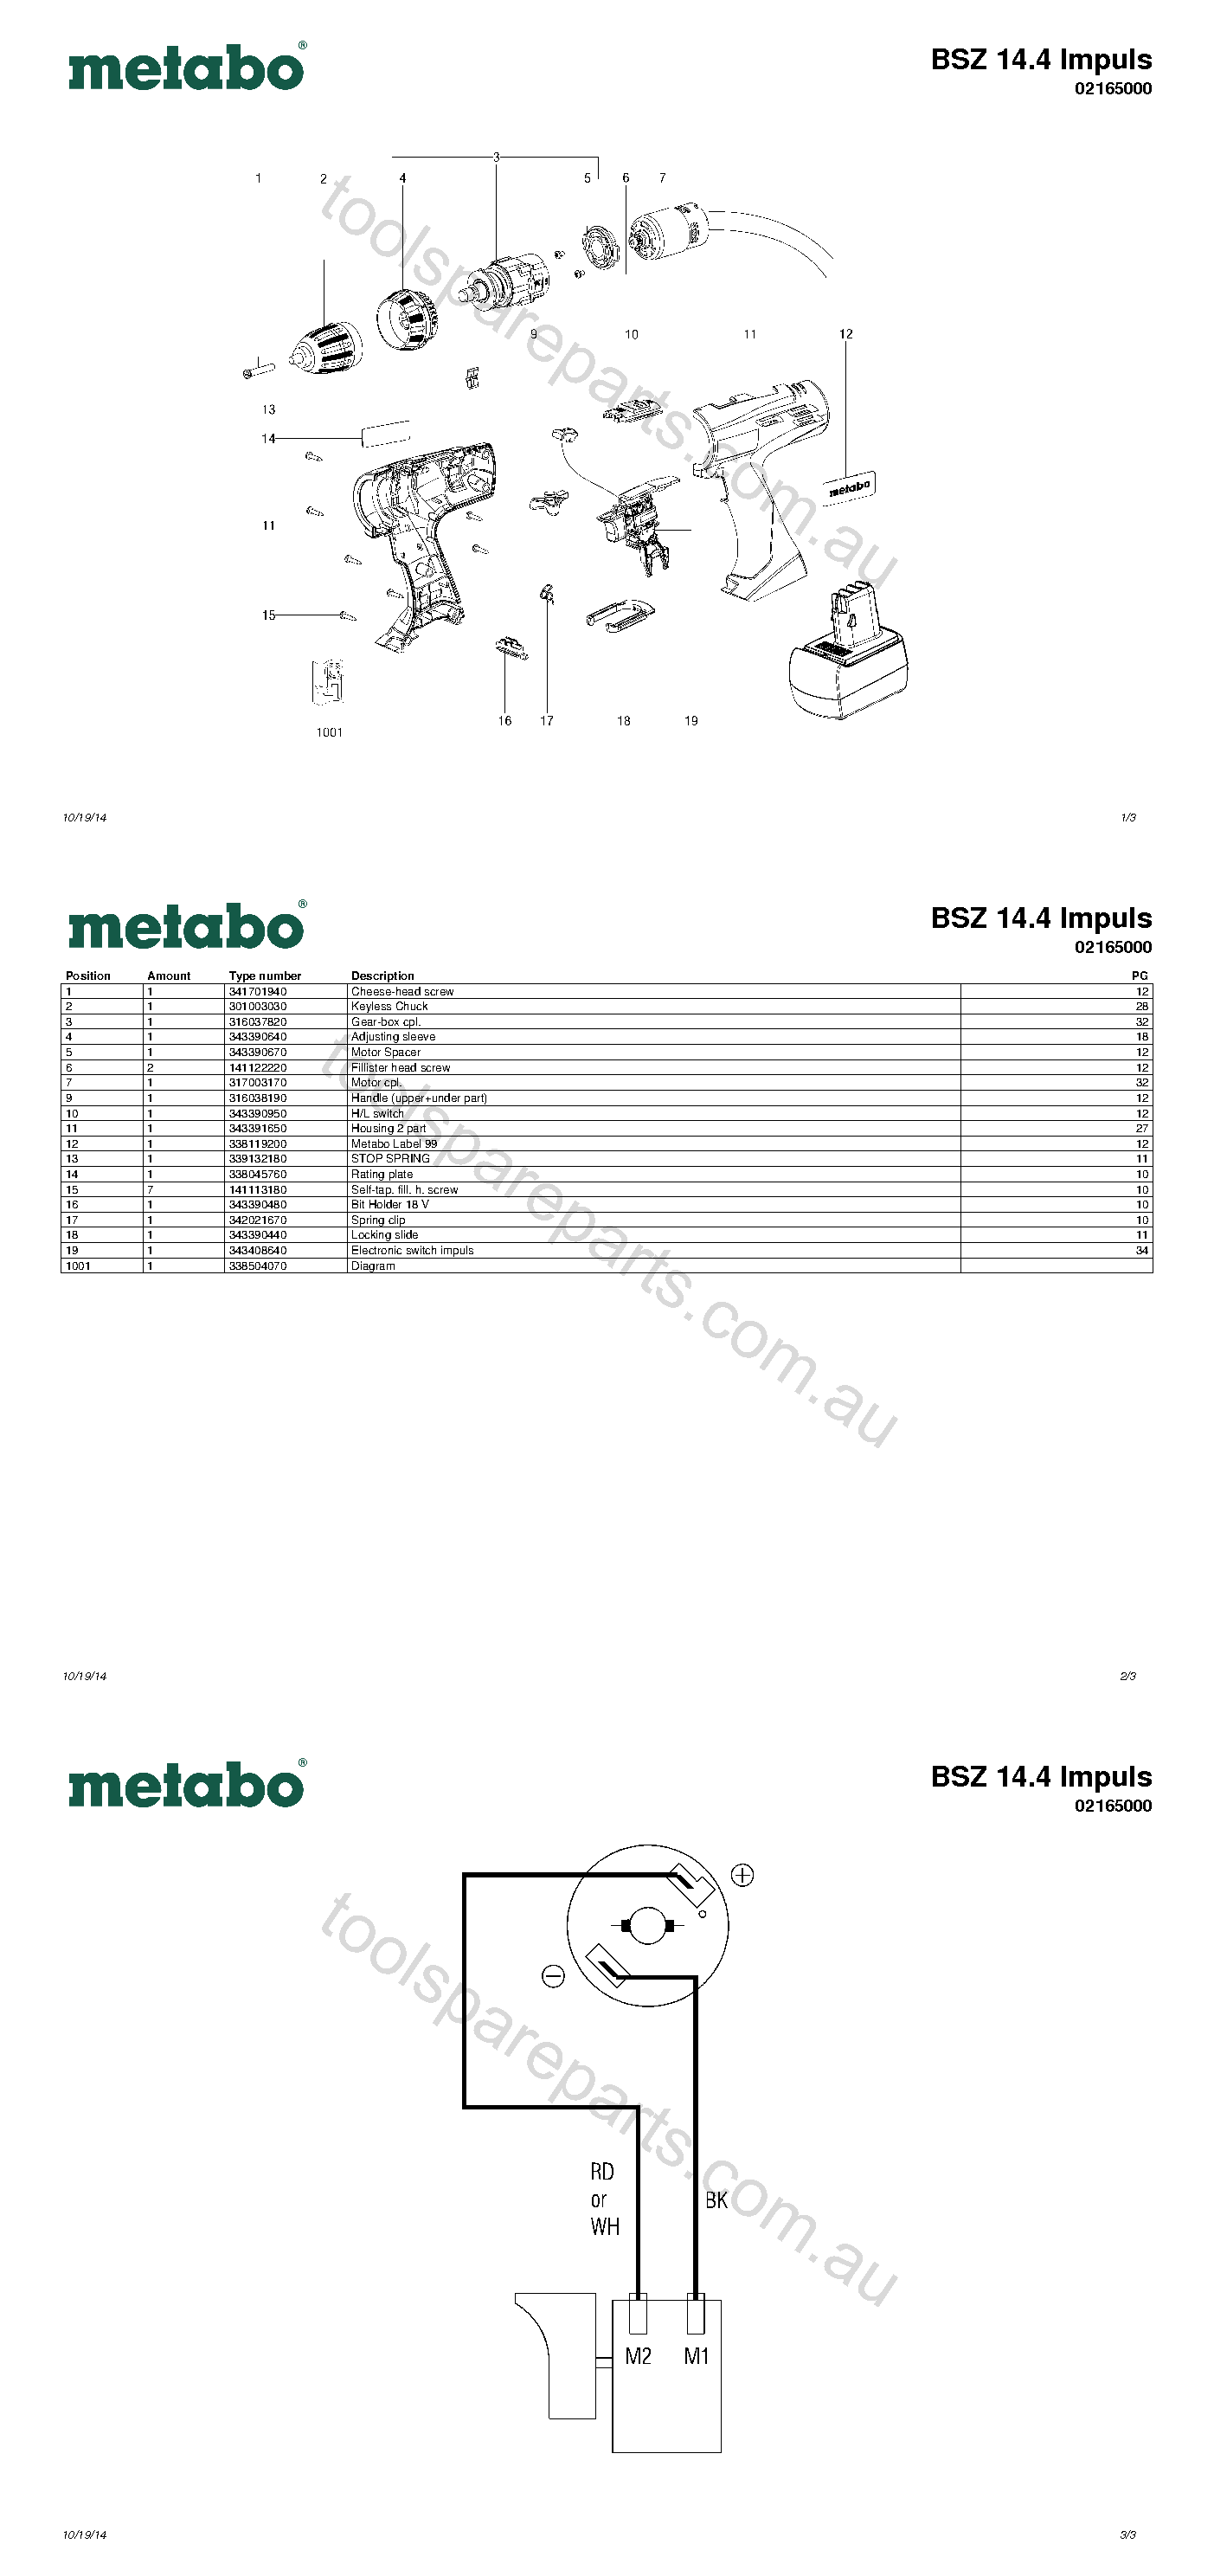 Metabo BSZ 14.4 Impuls 02165000  Diagram 1